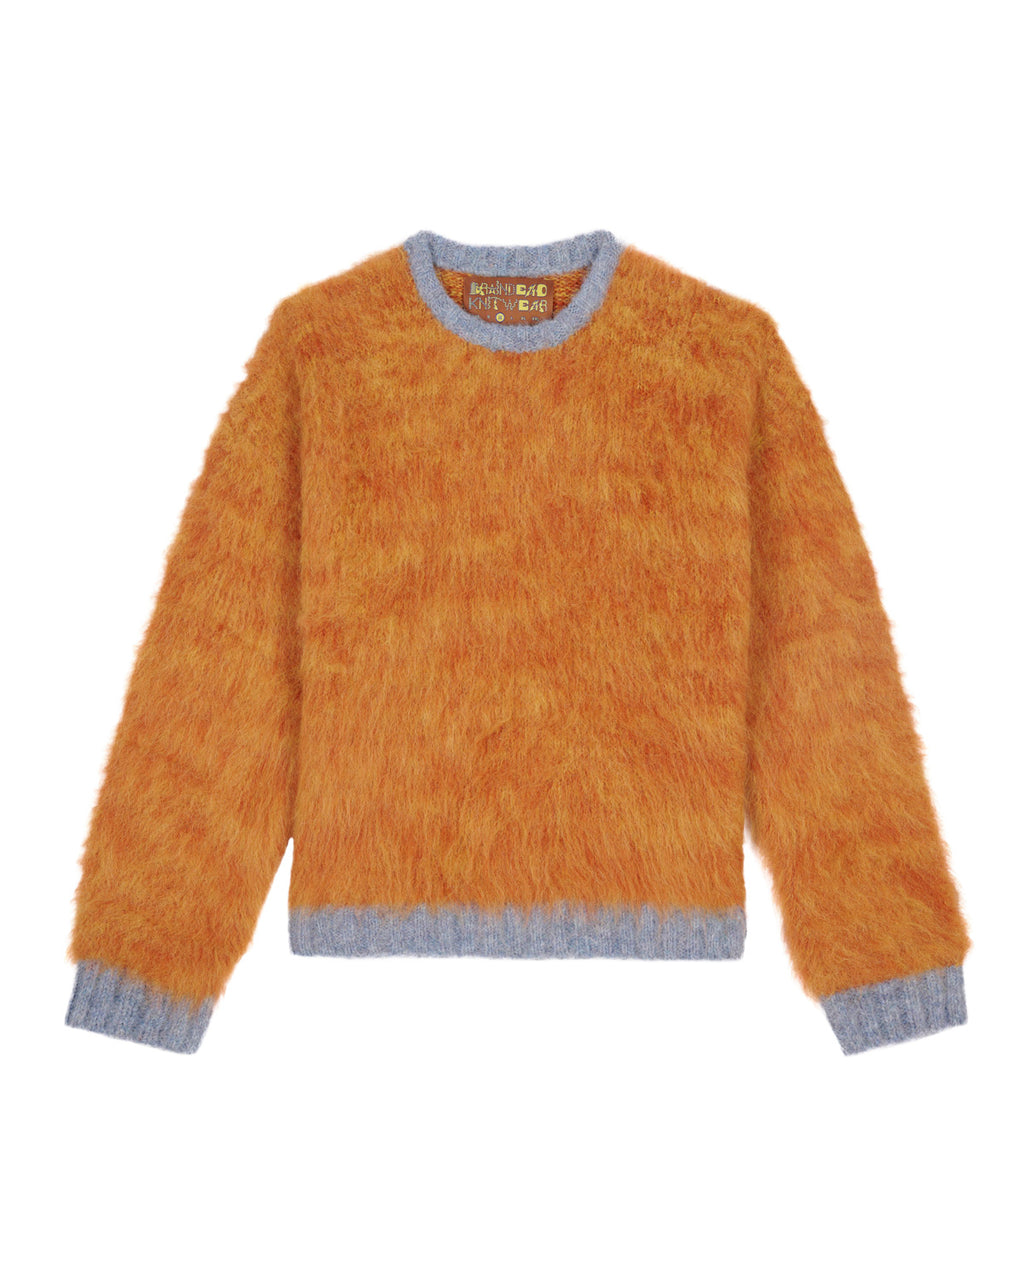 Marled Alpaca Crewneck Sweater - Orange 1